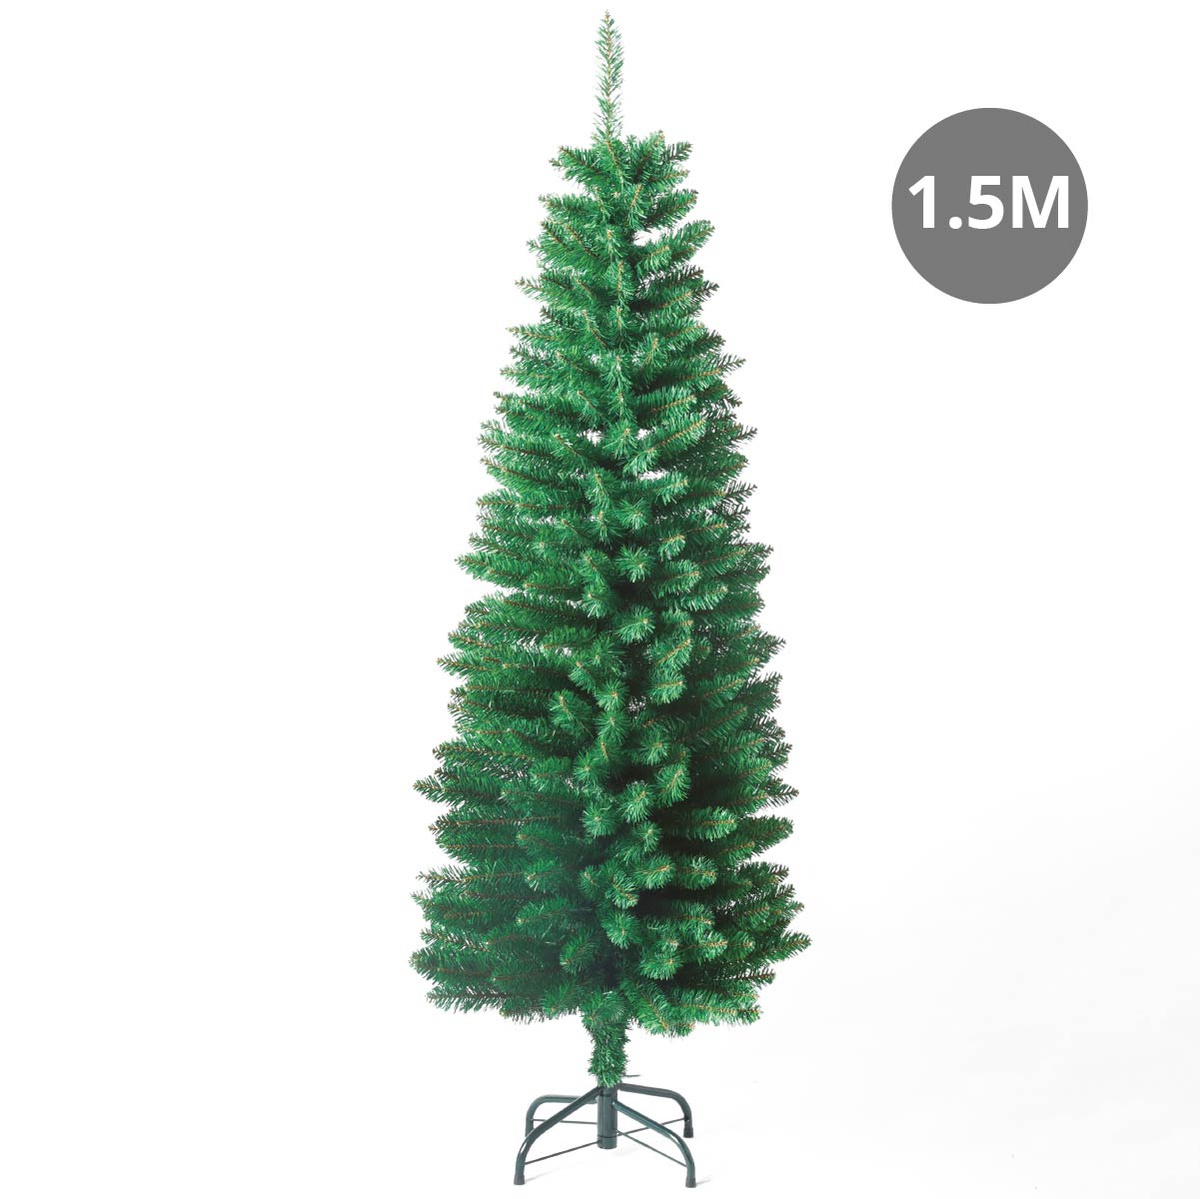 Bousso artificial Christmas slim tree 1,5M 360 tips